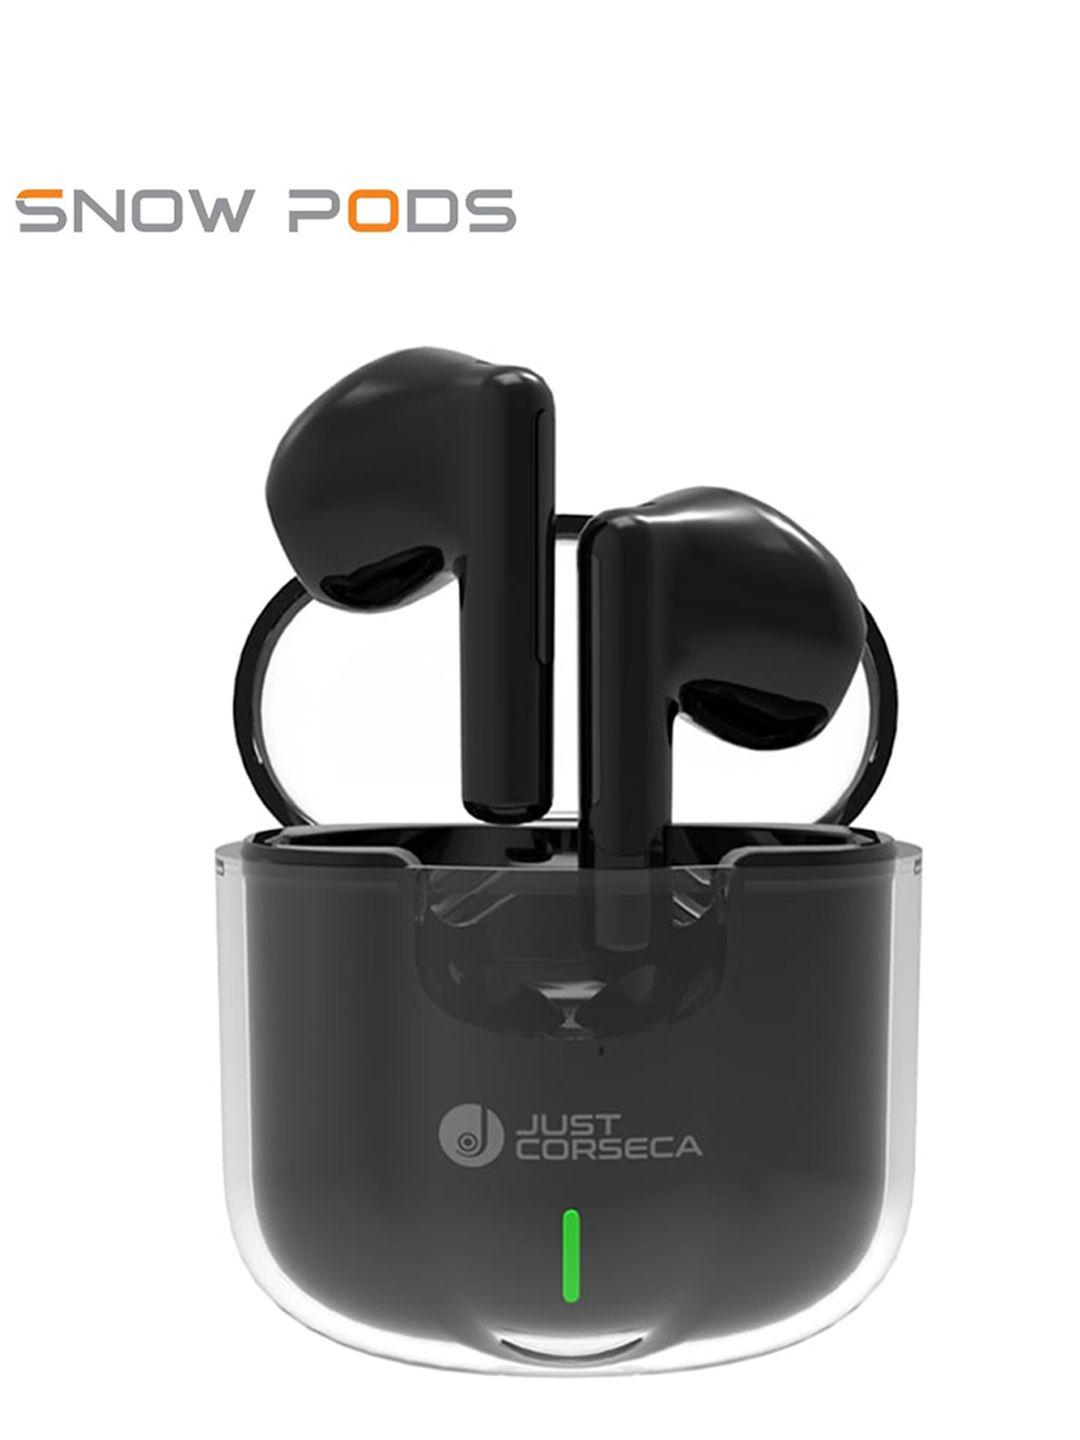 just corseca snow pods wireless powerbuds bluetooth 5.1 headphones